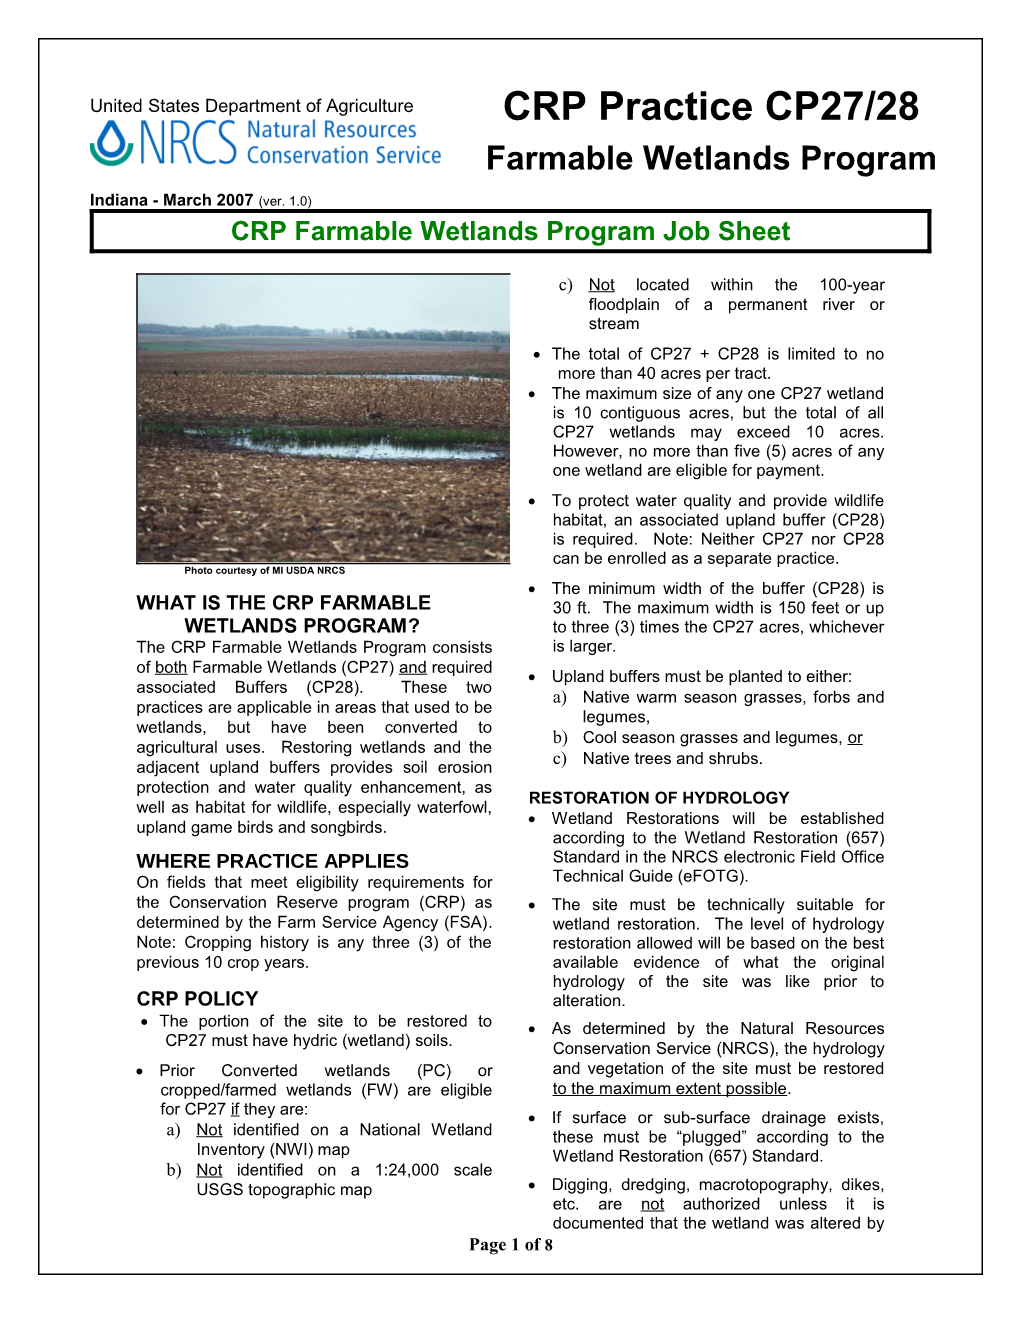 CRP Farmable Wetlandsprogram Job Sheet